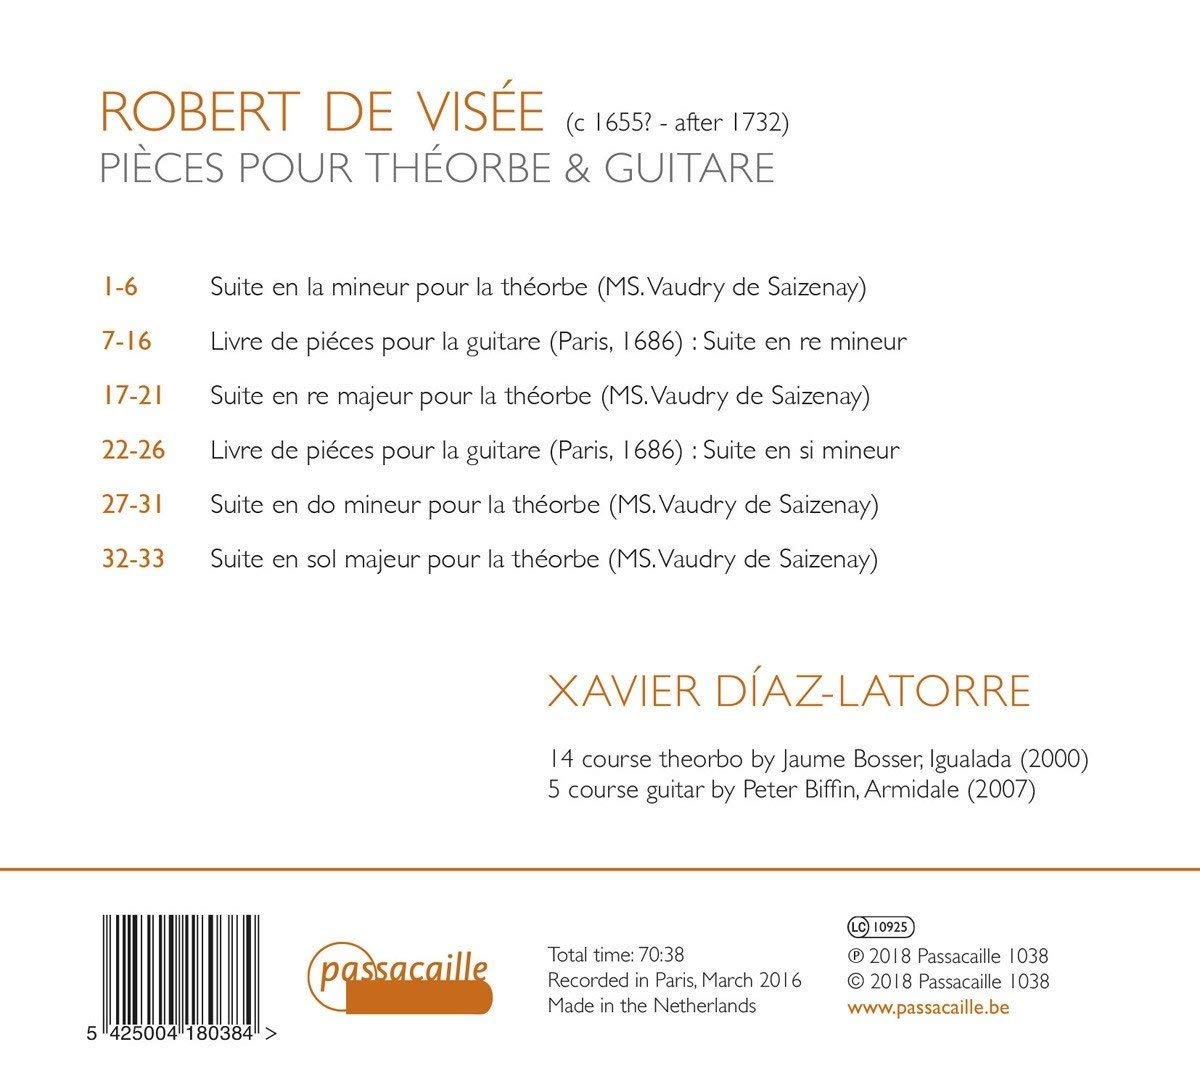 Xavier Diaz-Latorre 로베르 드 비제: 테오르보와 기타를 위한 여섯 곡의 모음곡 (Robert de Visee: Pieces for Theorbo & Guitar) 